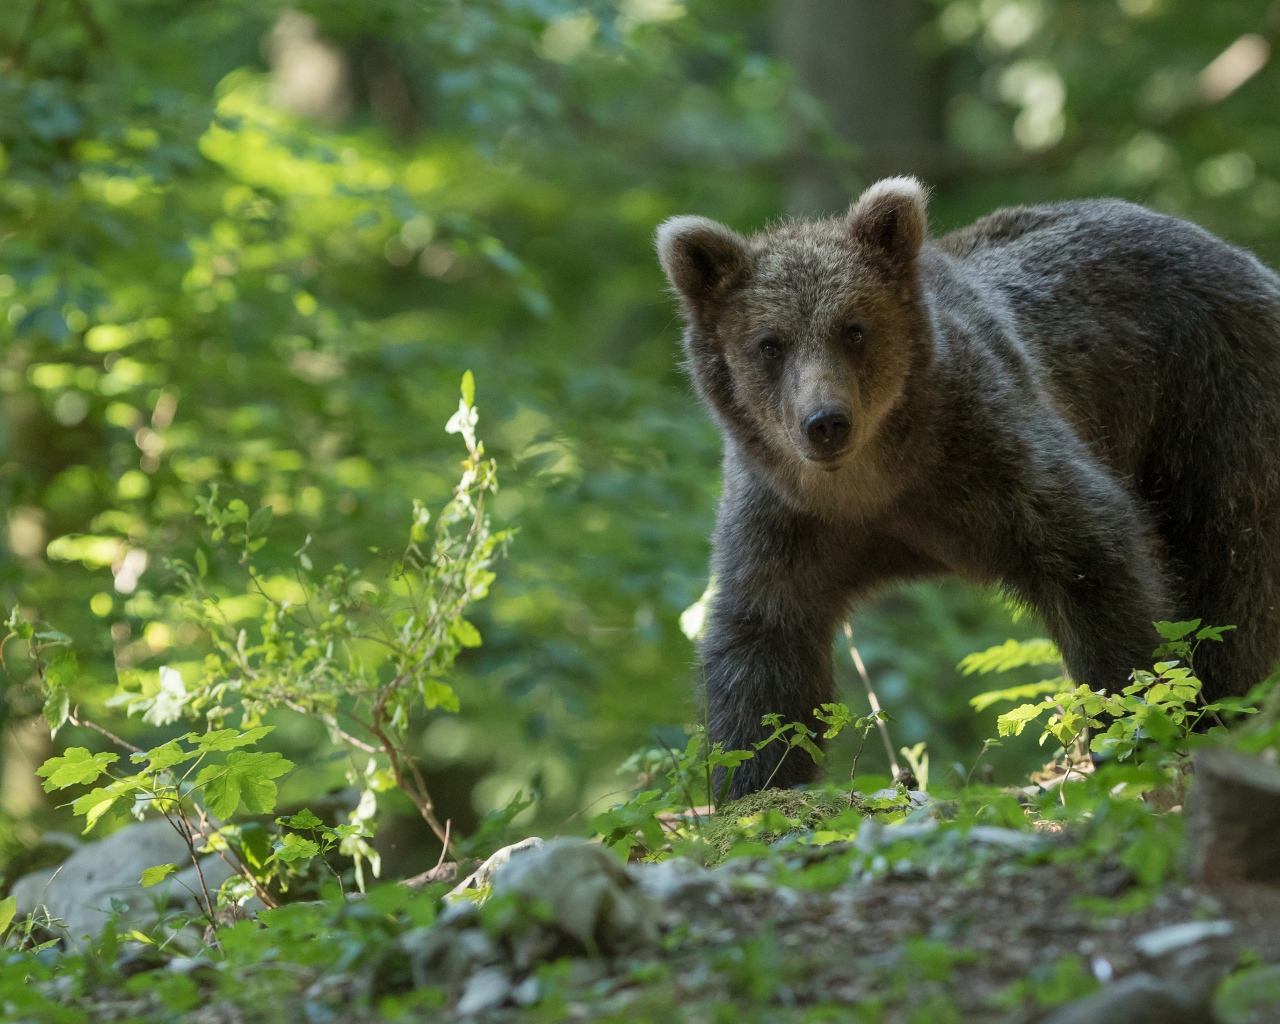 A brown bear walks through the forest